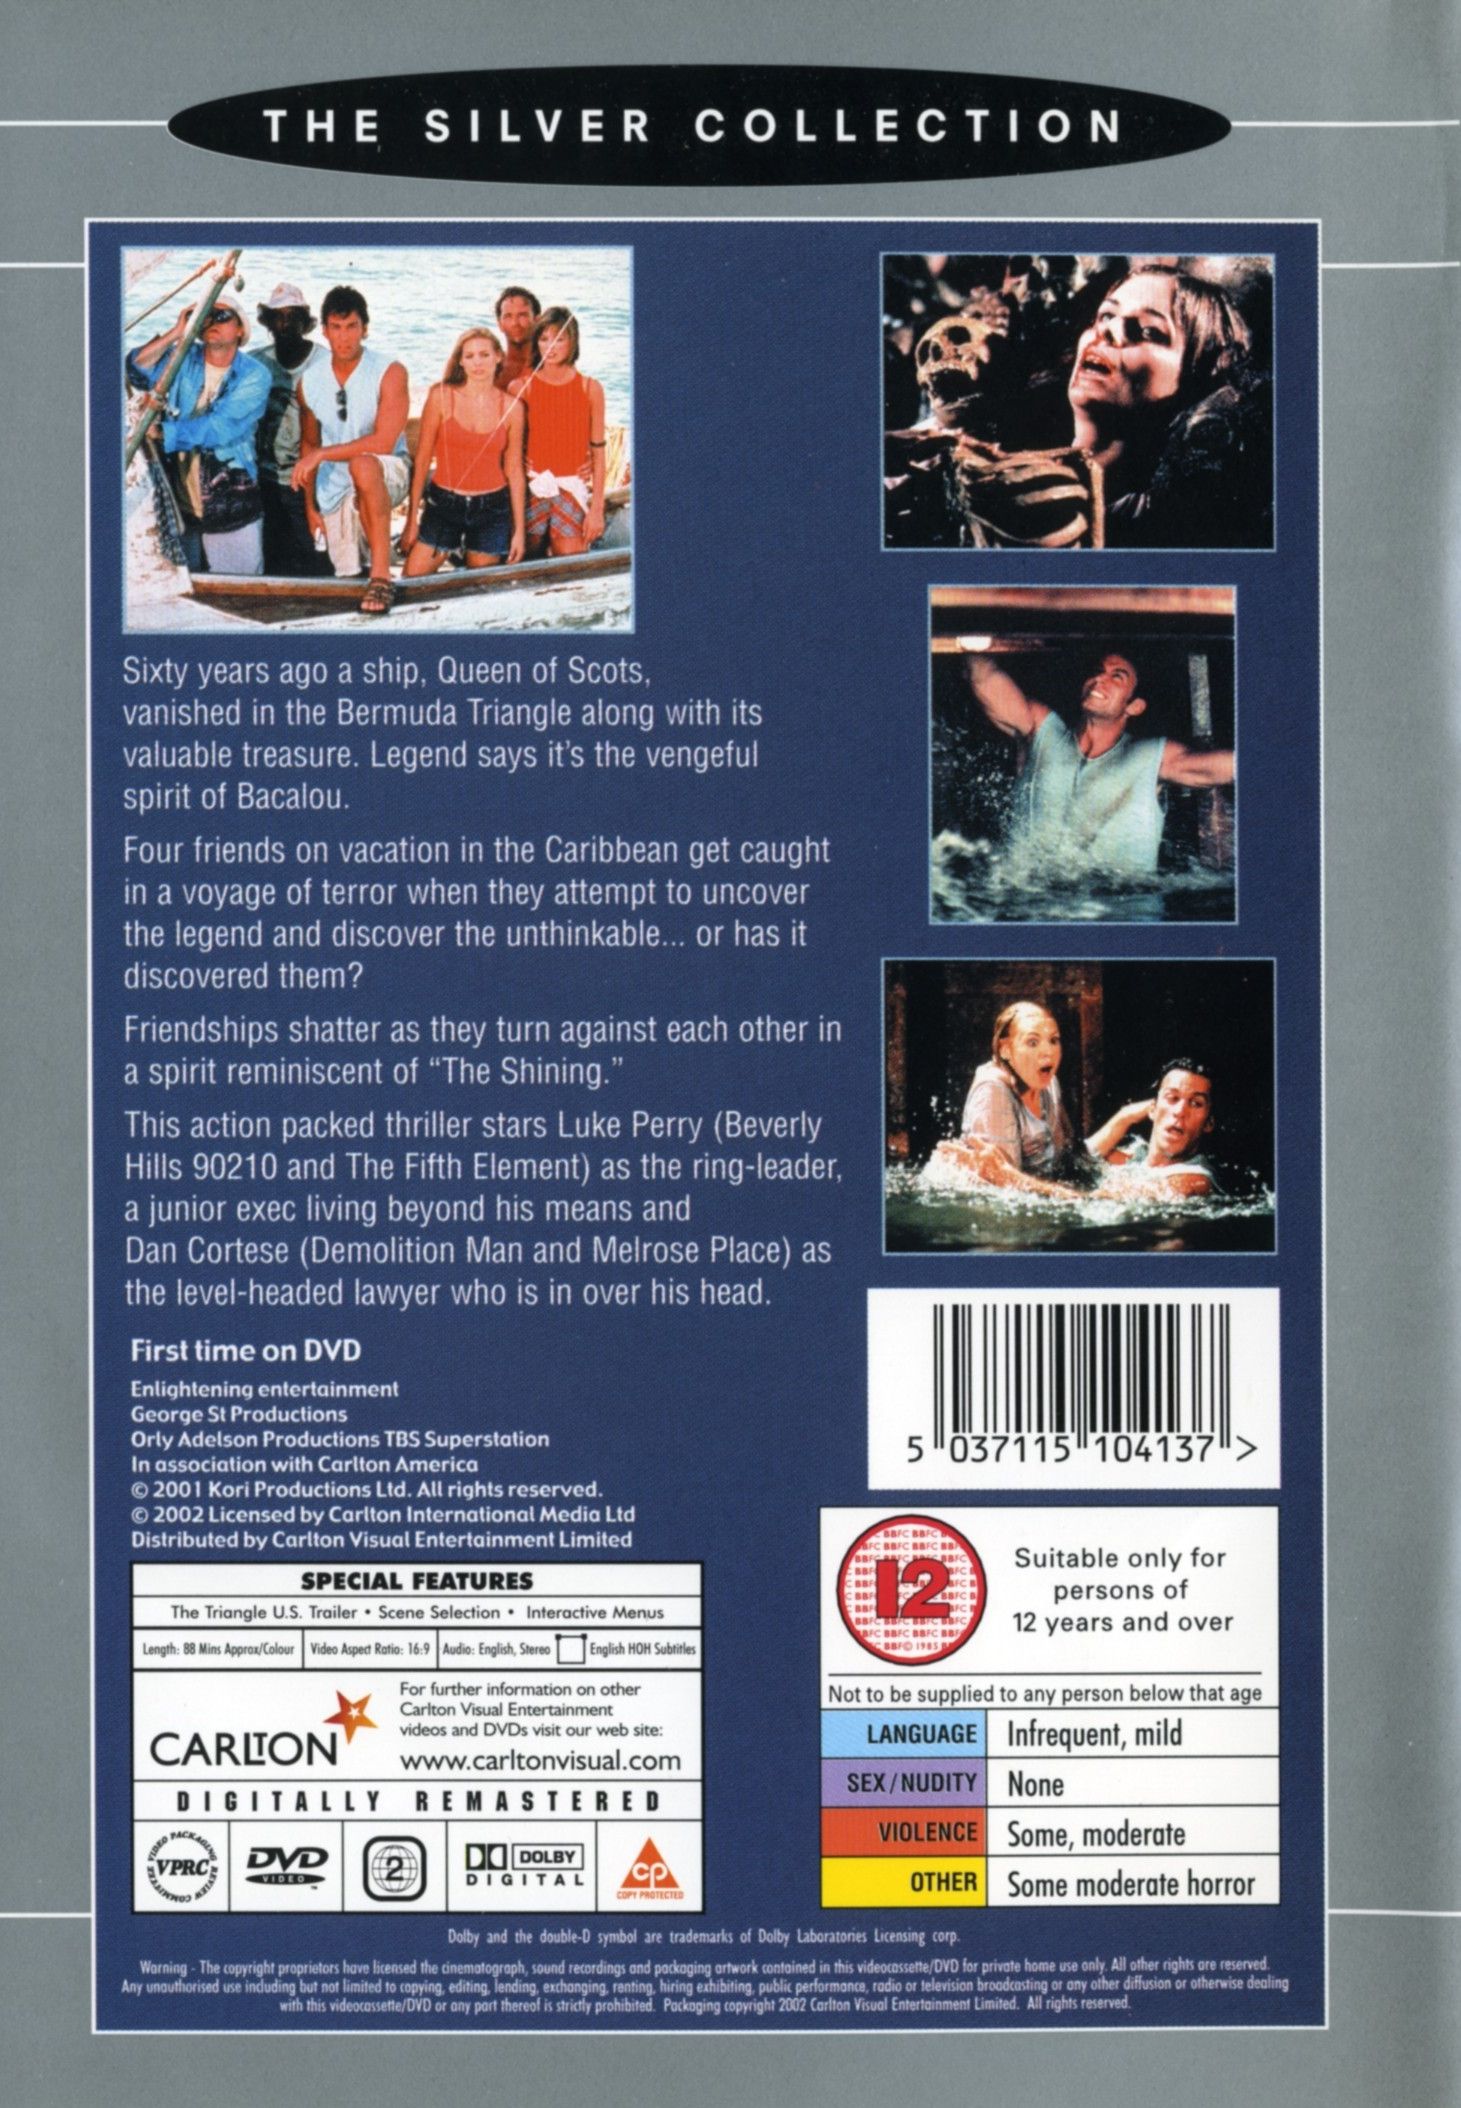 The Triangle - DVD Cover - Back
Keywords: triangle_media;media_cover